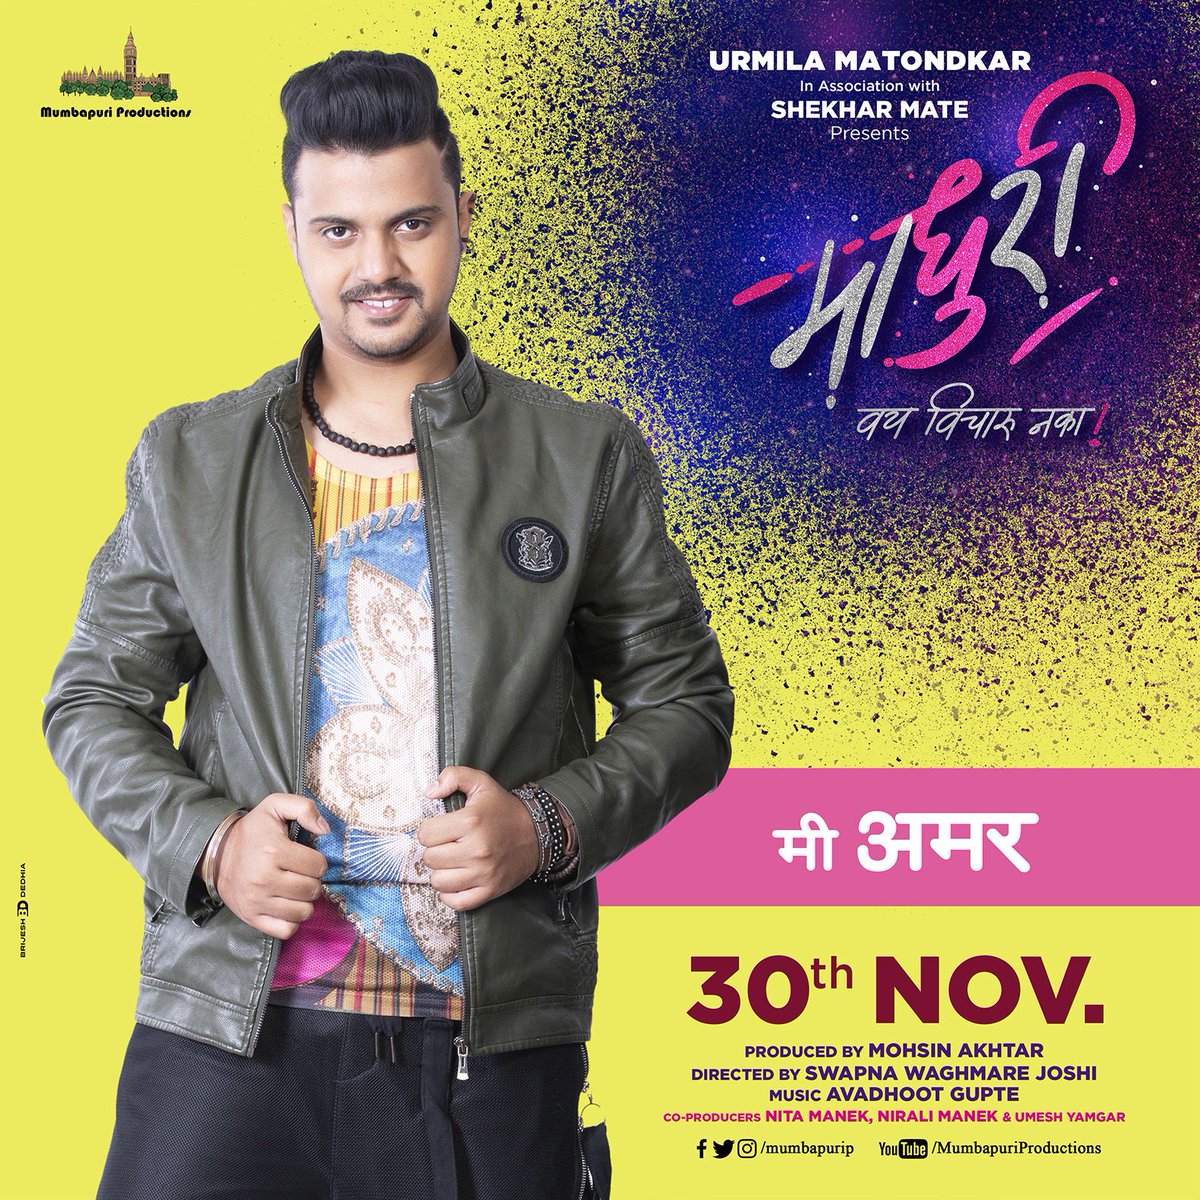 तुम्हाला भेटायला येतोय #VirajasKulkarni as Amar <3
#माधुरी फक्त ४ दिवसात !! #Madhuri #5DaysToGo
वय विचारू नका !!! 💁 
#MadhuriTrailer on Youtube: buff.ly/2Ds8Mmz
#Madhurithefilm | Release 30th Nov 2018 #Marathi 
@RAVA_Official @PROMOTERS28 @megamarathi